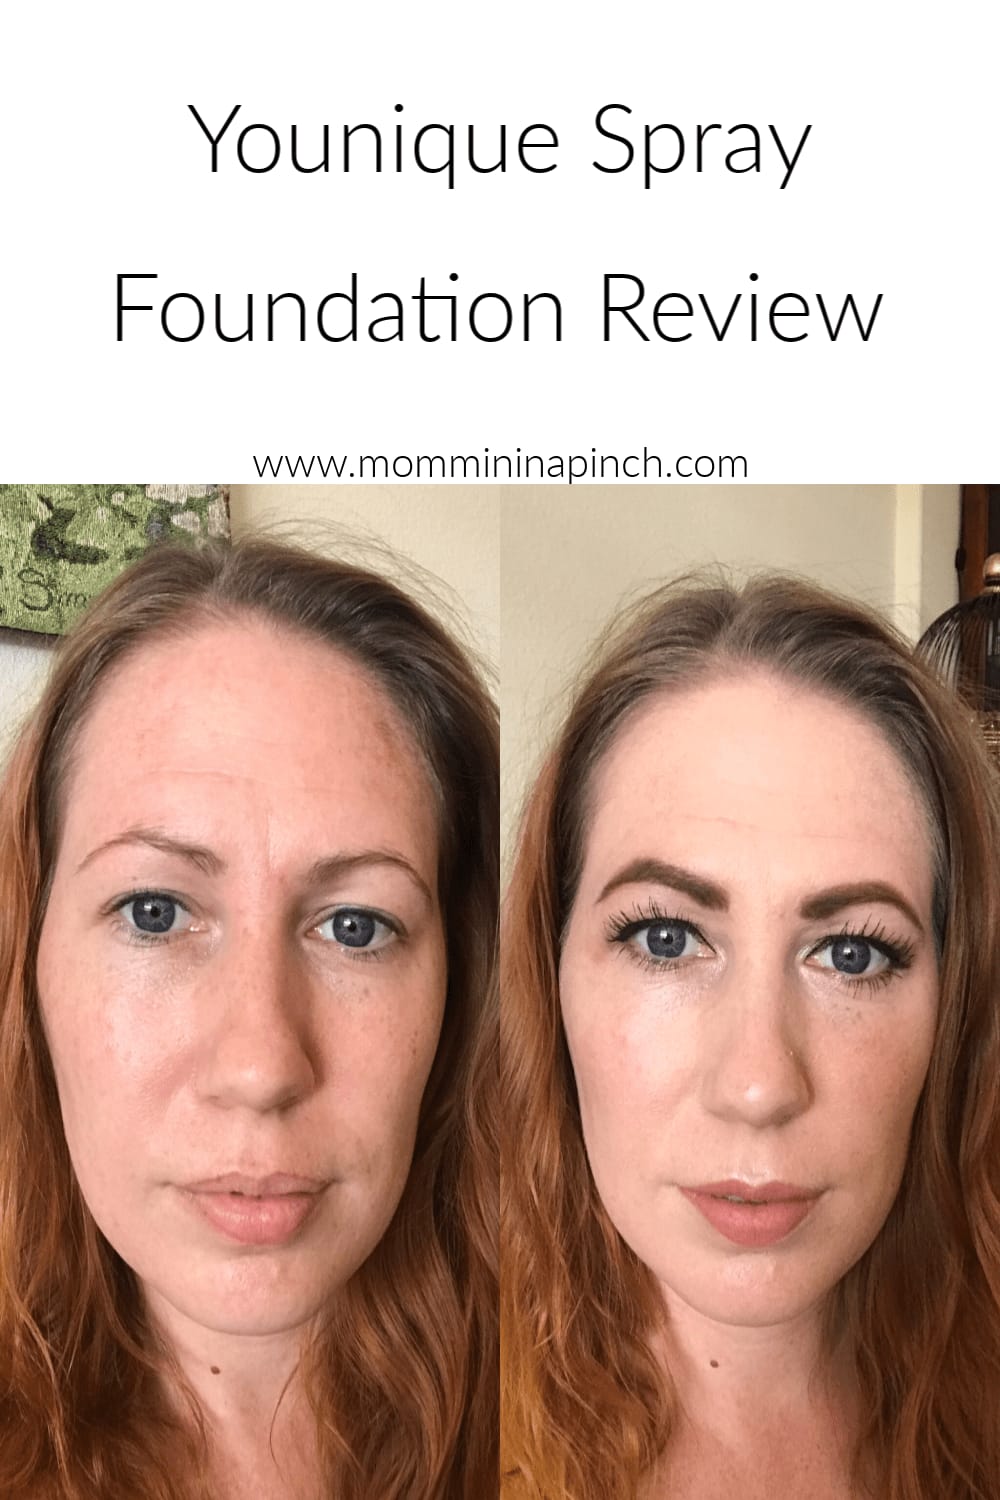 Younique spray foundation review